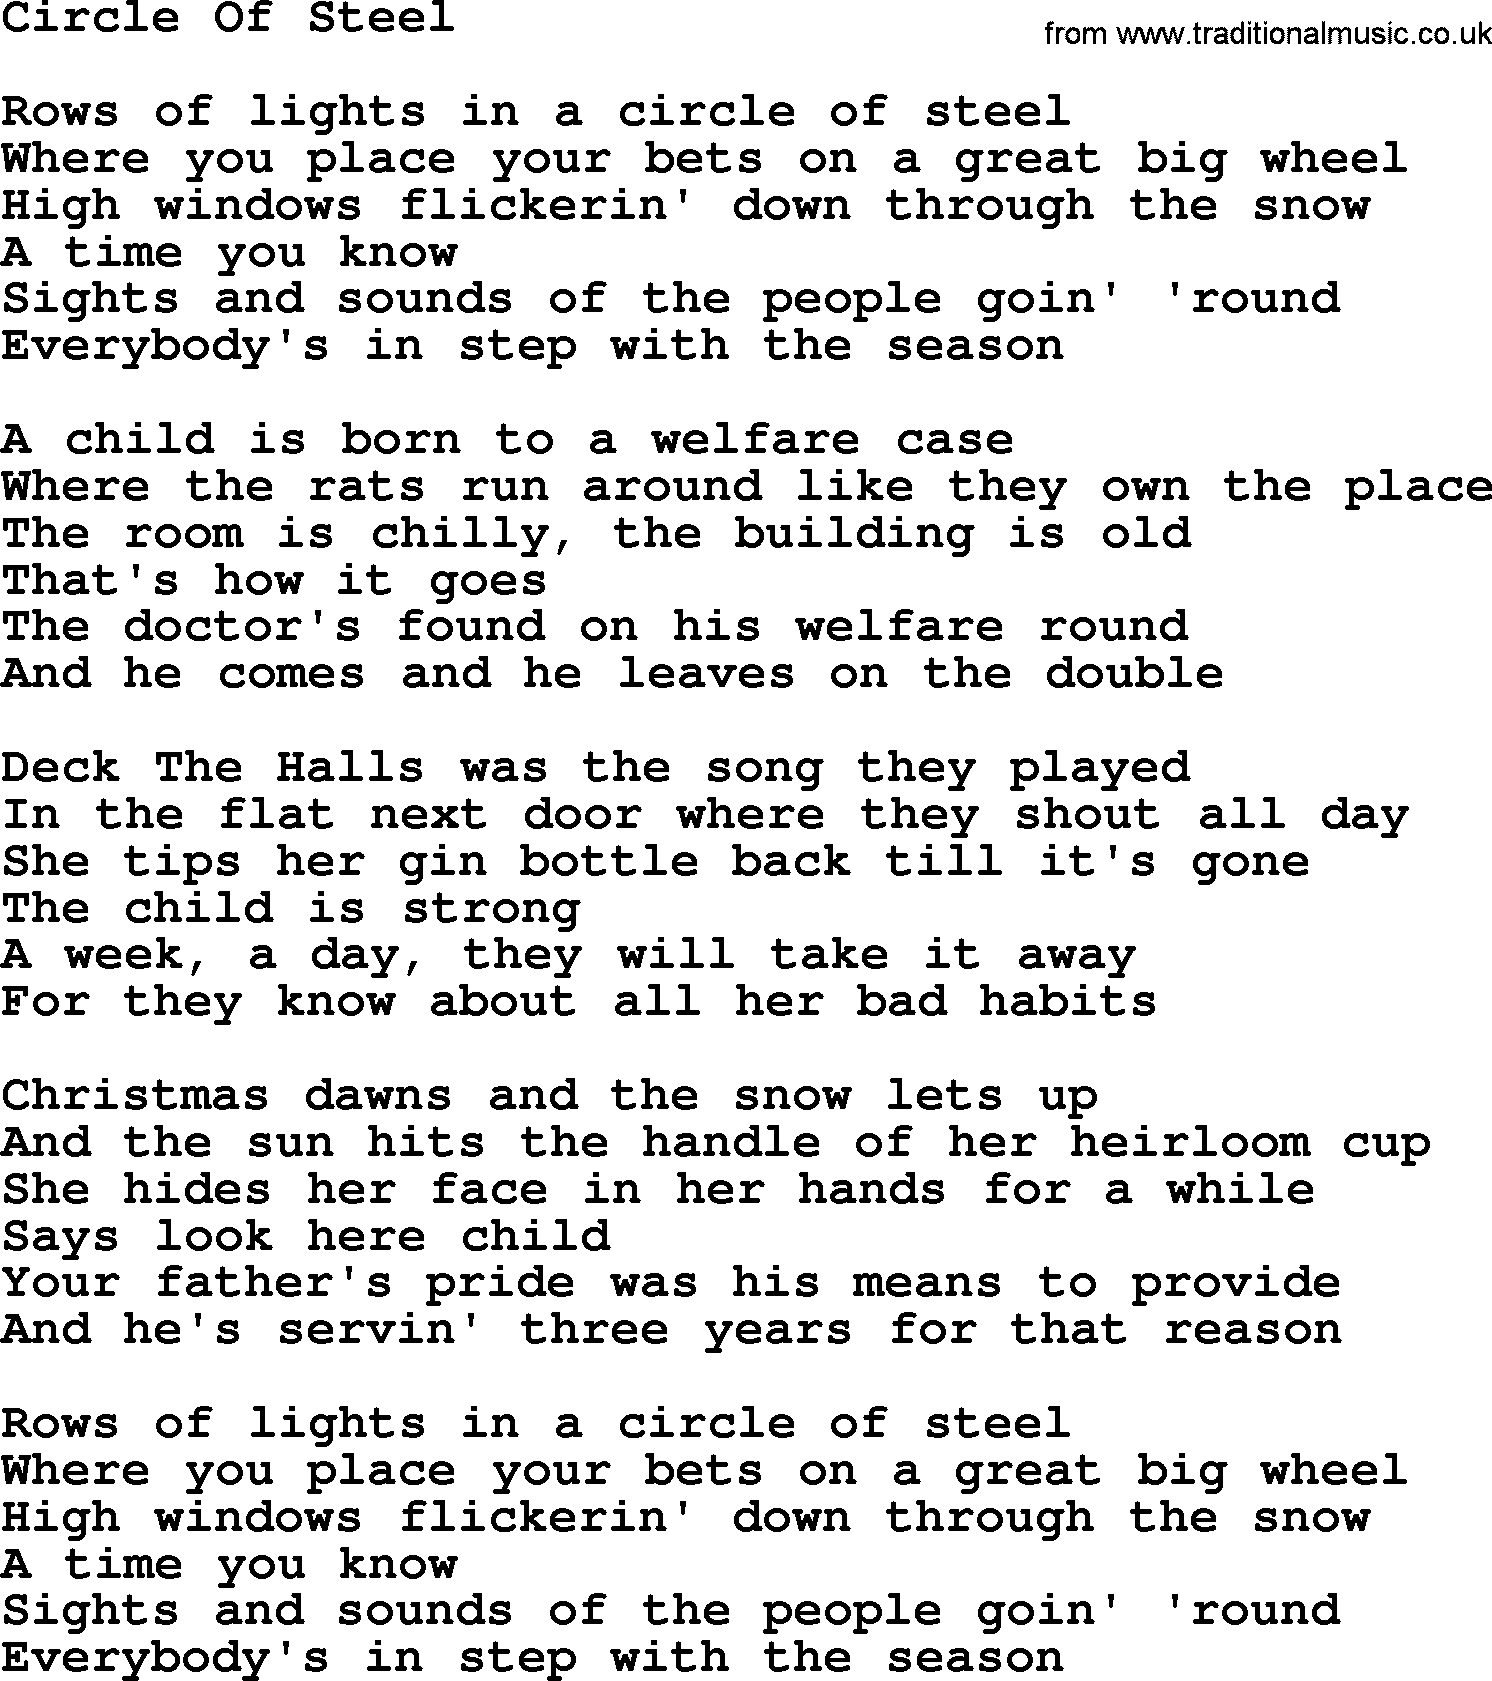 Gordon Lightfoot song Circle Of Steel, lyrics